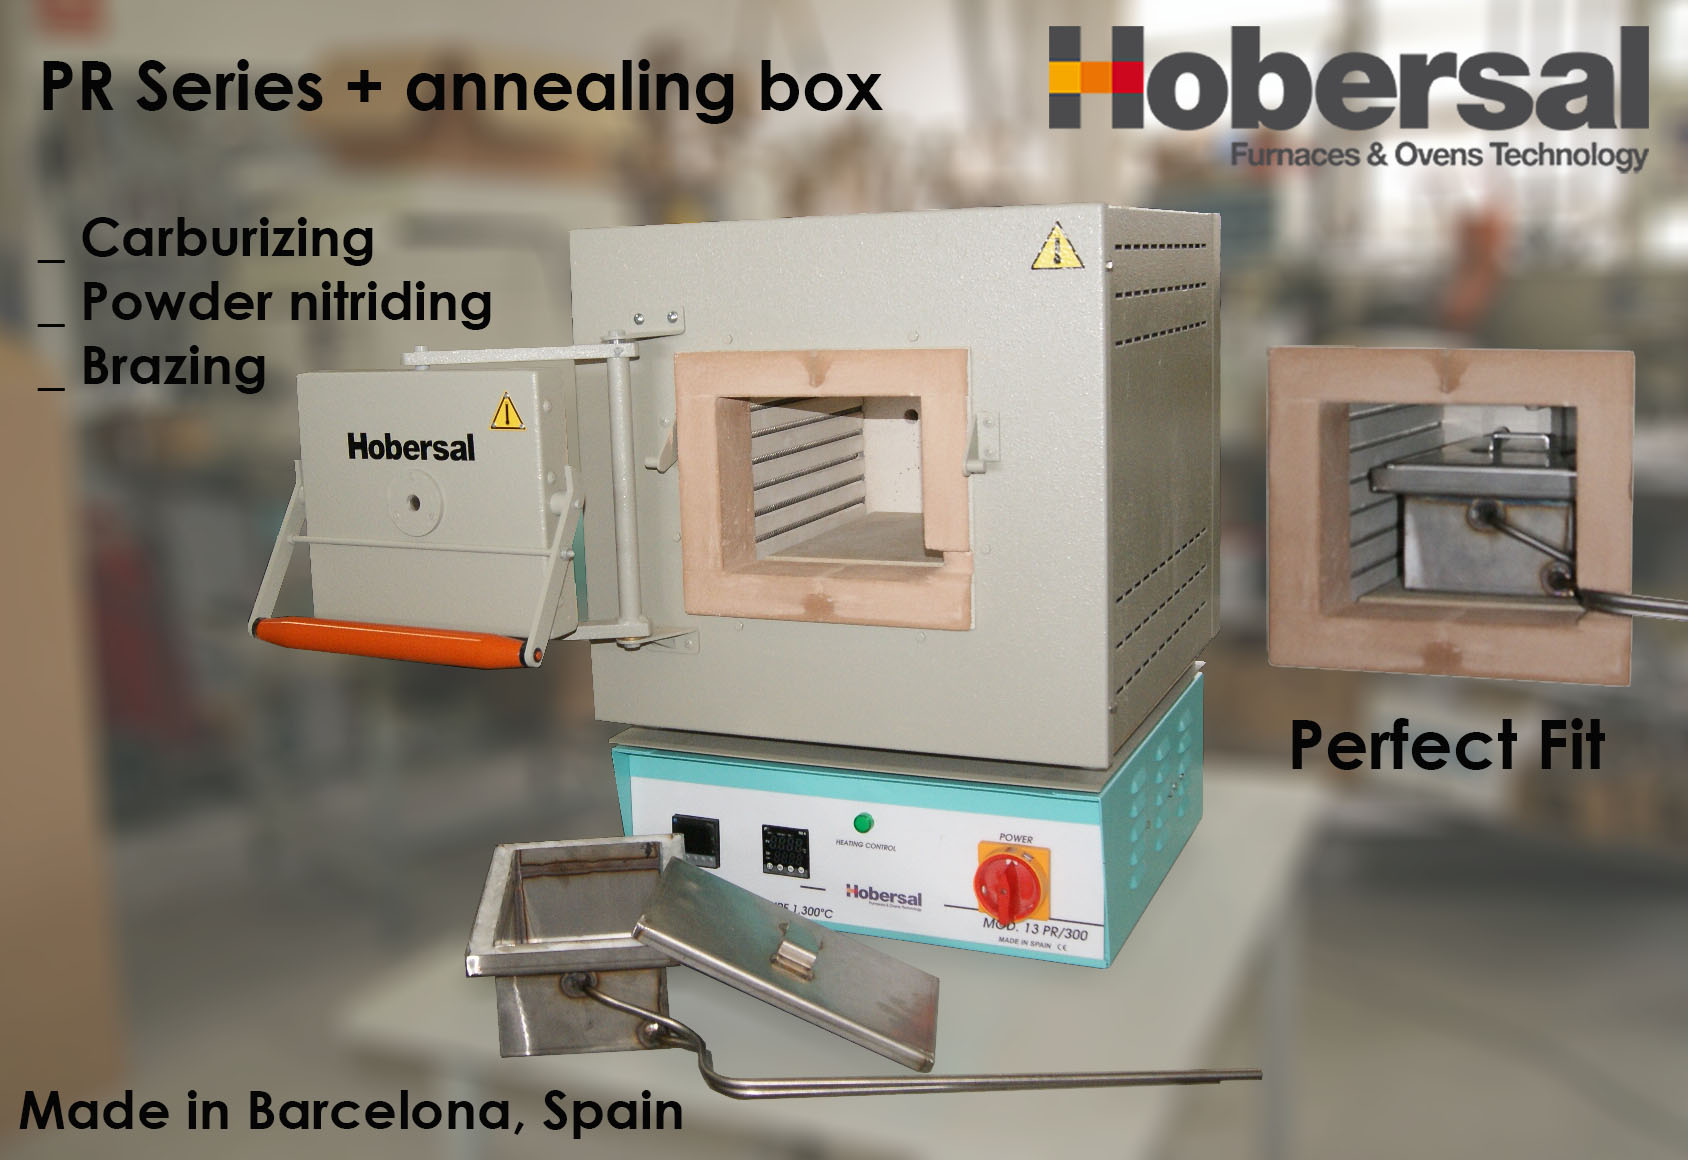 Chamber furnace + annealing box Hobersal PR series